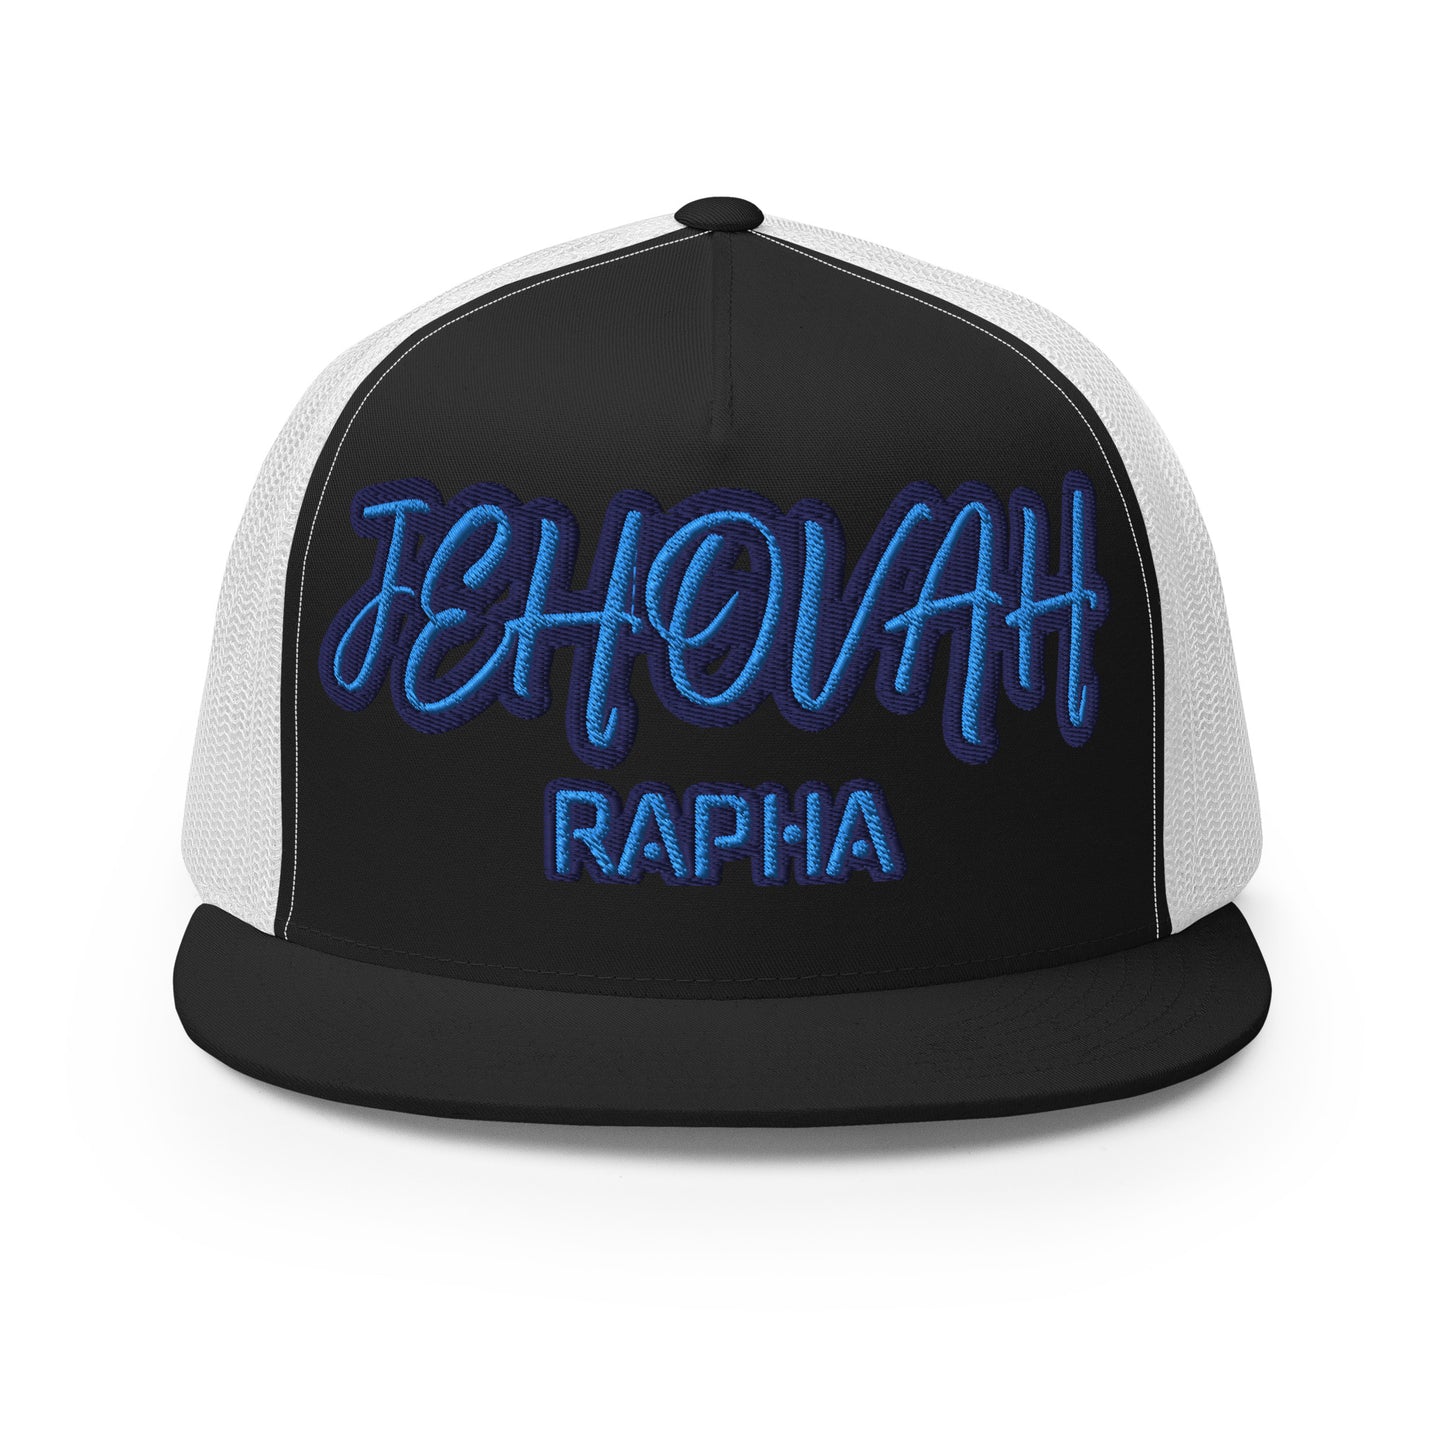 JEHOVAH RAPHA- Trucker Cap